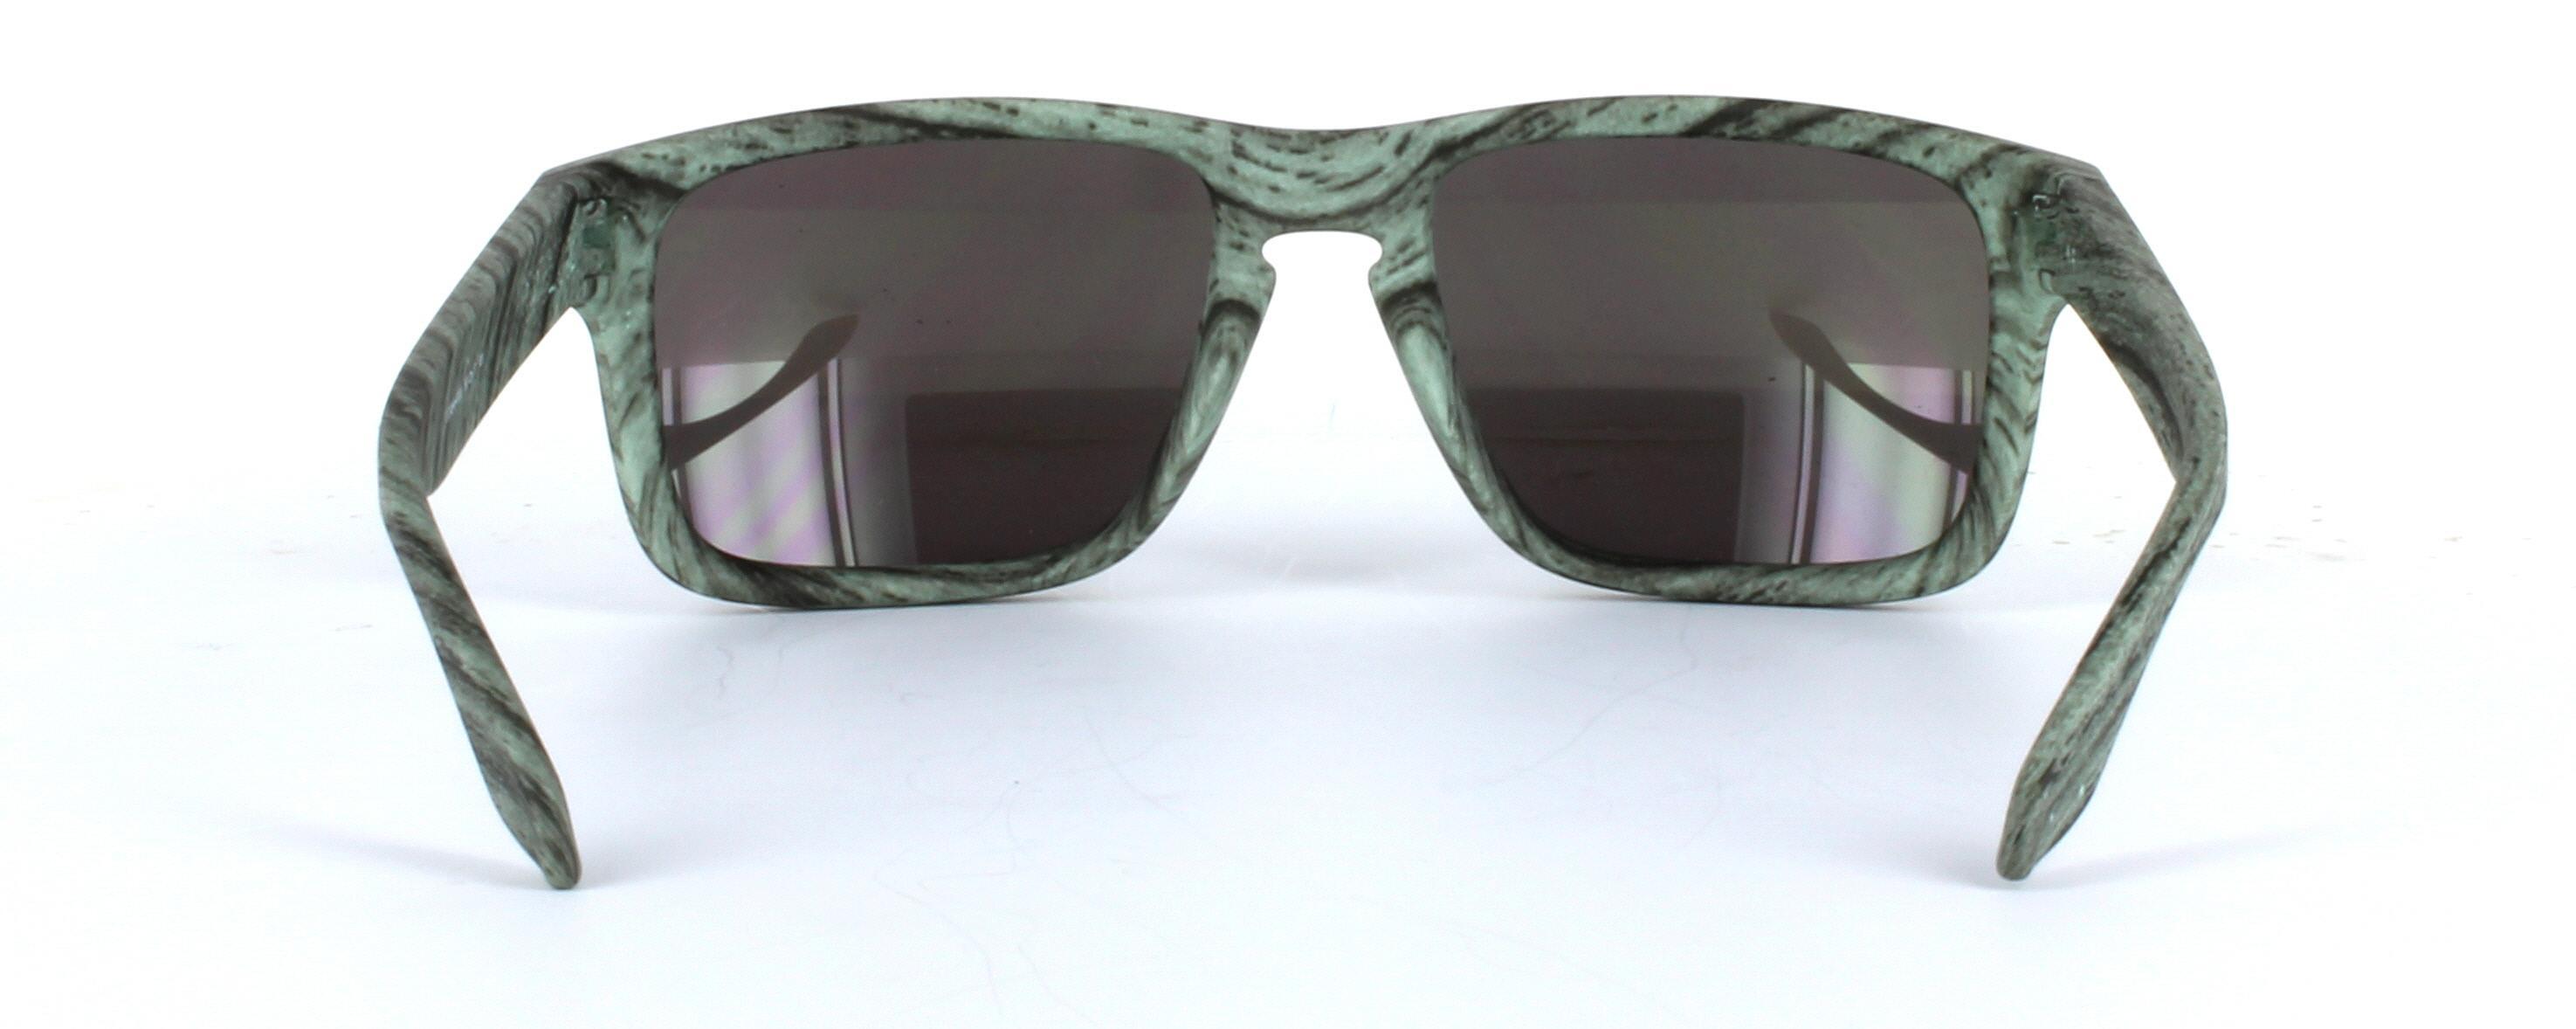 Oakley Ivywood Grey Full Rim Plastic Prescription Sunglasses - Image View 3